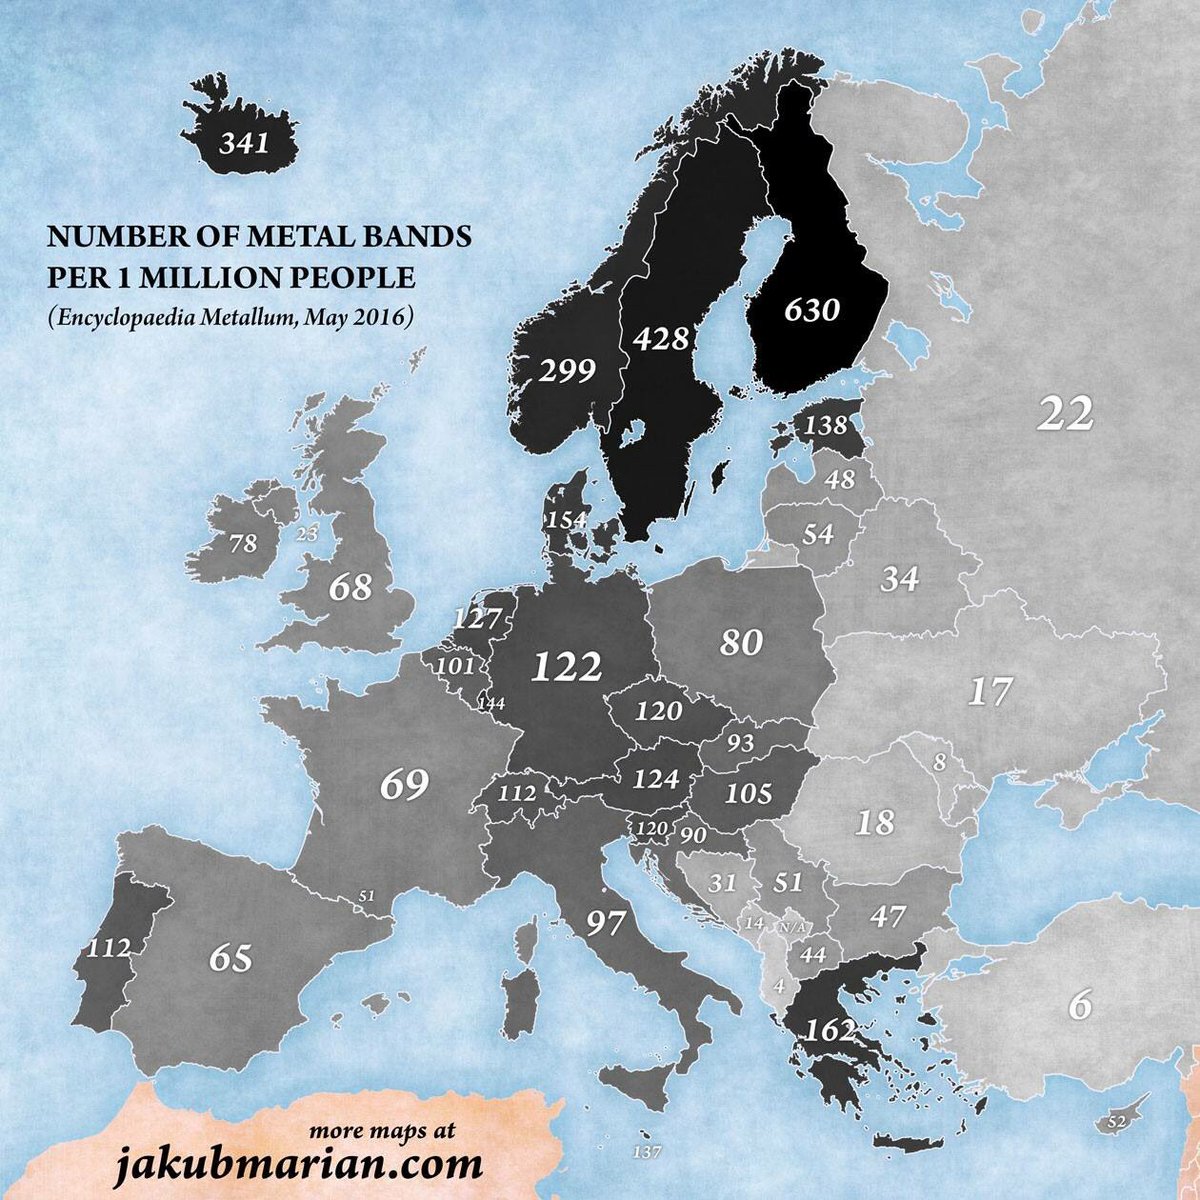 Fascinating maps - metal bands in europe - 341 Number Of Metal Bands Per 1 Million People Encyclopaedia Metallum, 1125 65 68 69 $144 1012 122 more maps at jakubmarian.com 299 112 154 97 428 120 124 120 90 137 80 93 105 630 138 31 51 48 54 44 34 18 162 47 